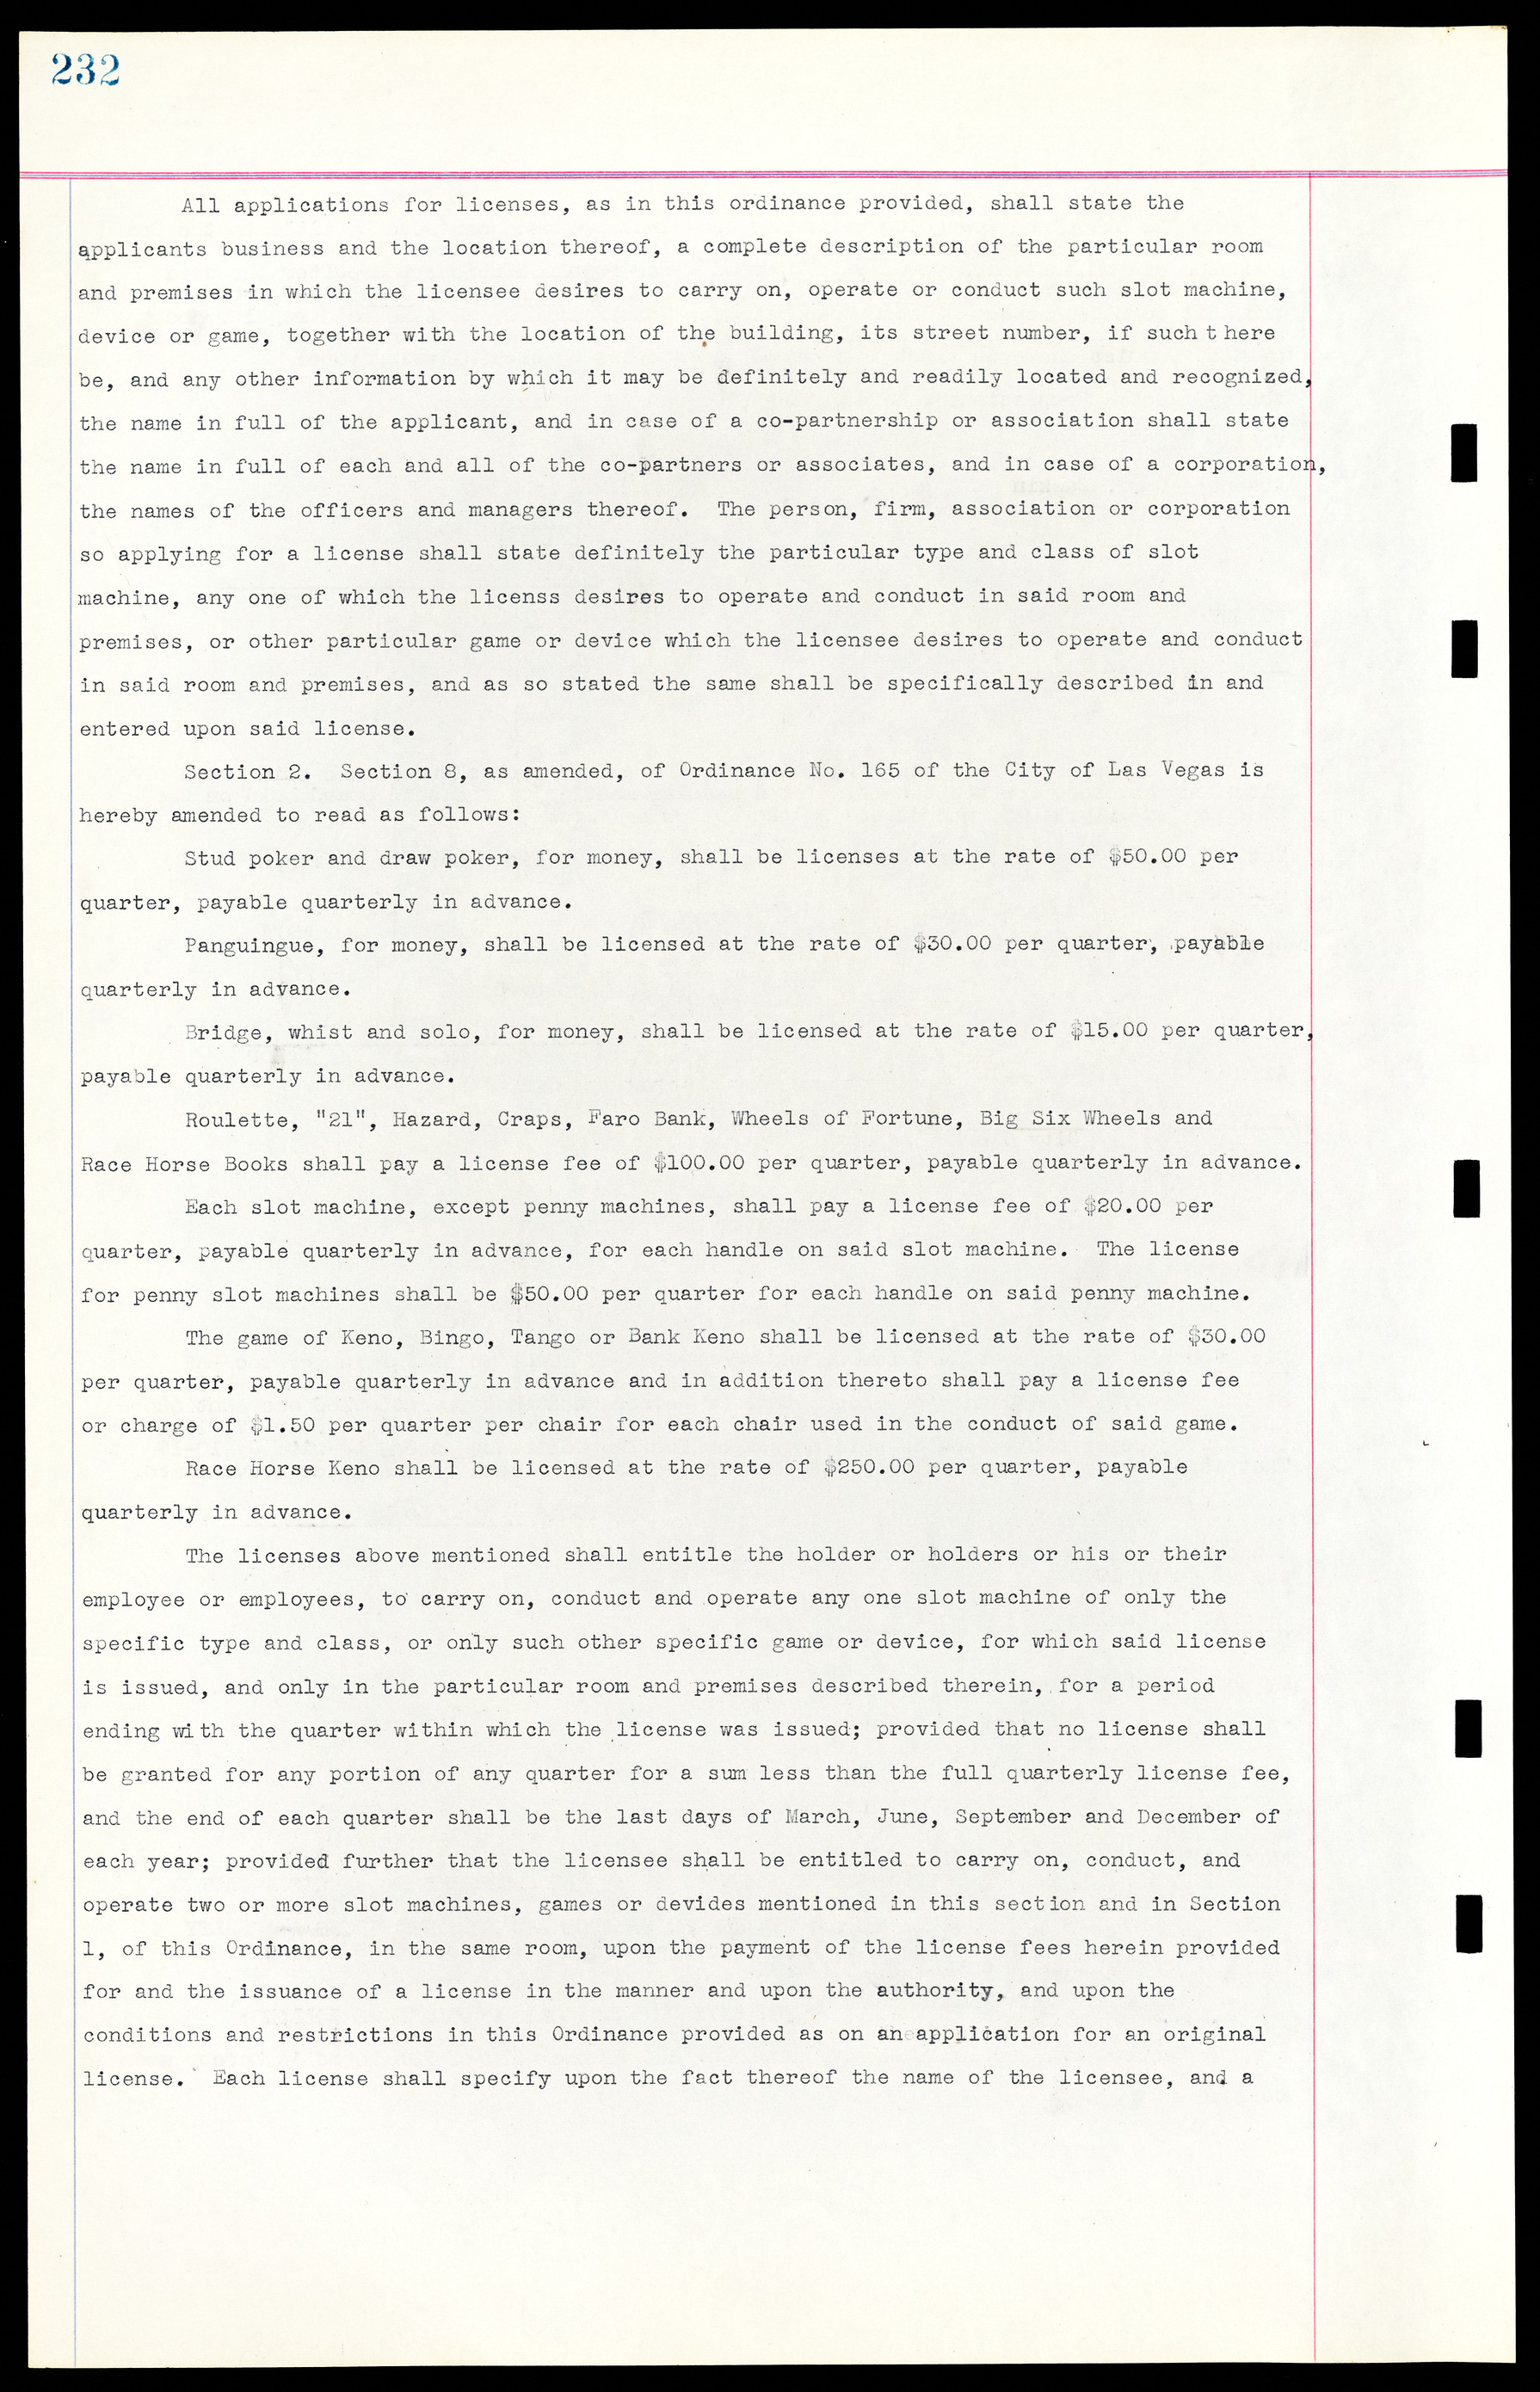 Las Vegas City Ordinances, March 31, 1933 to October 25, 1950, lvc000014-261